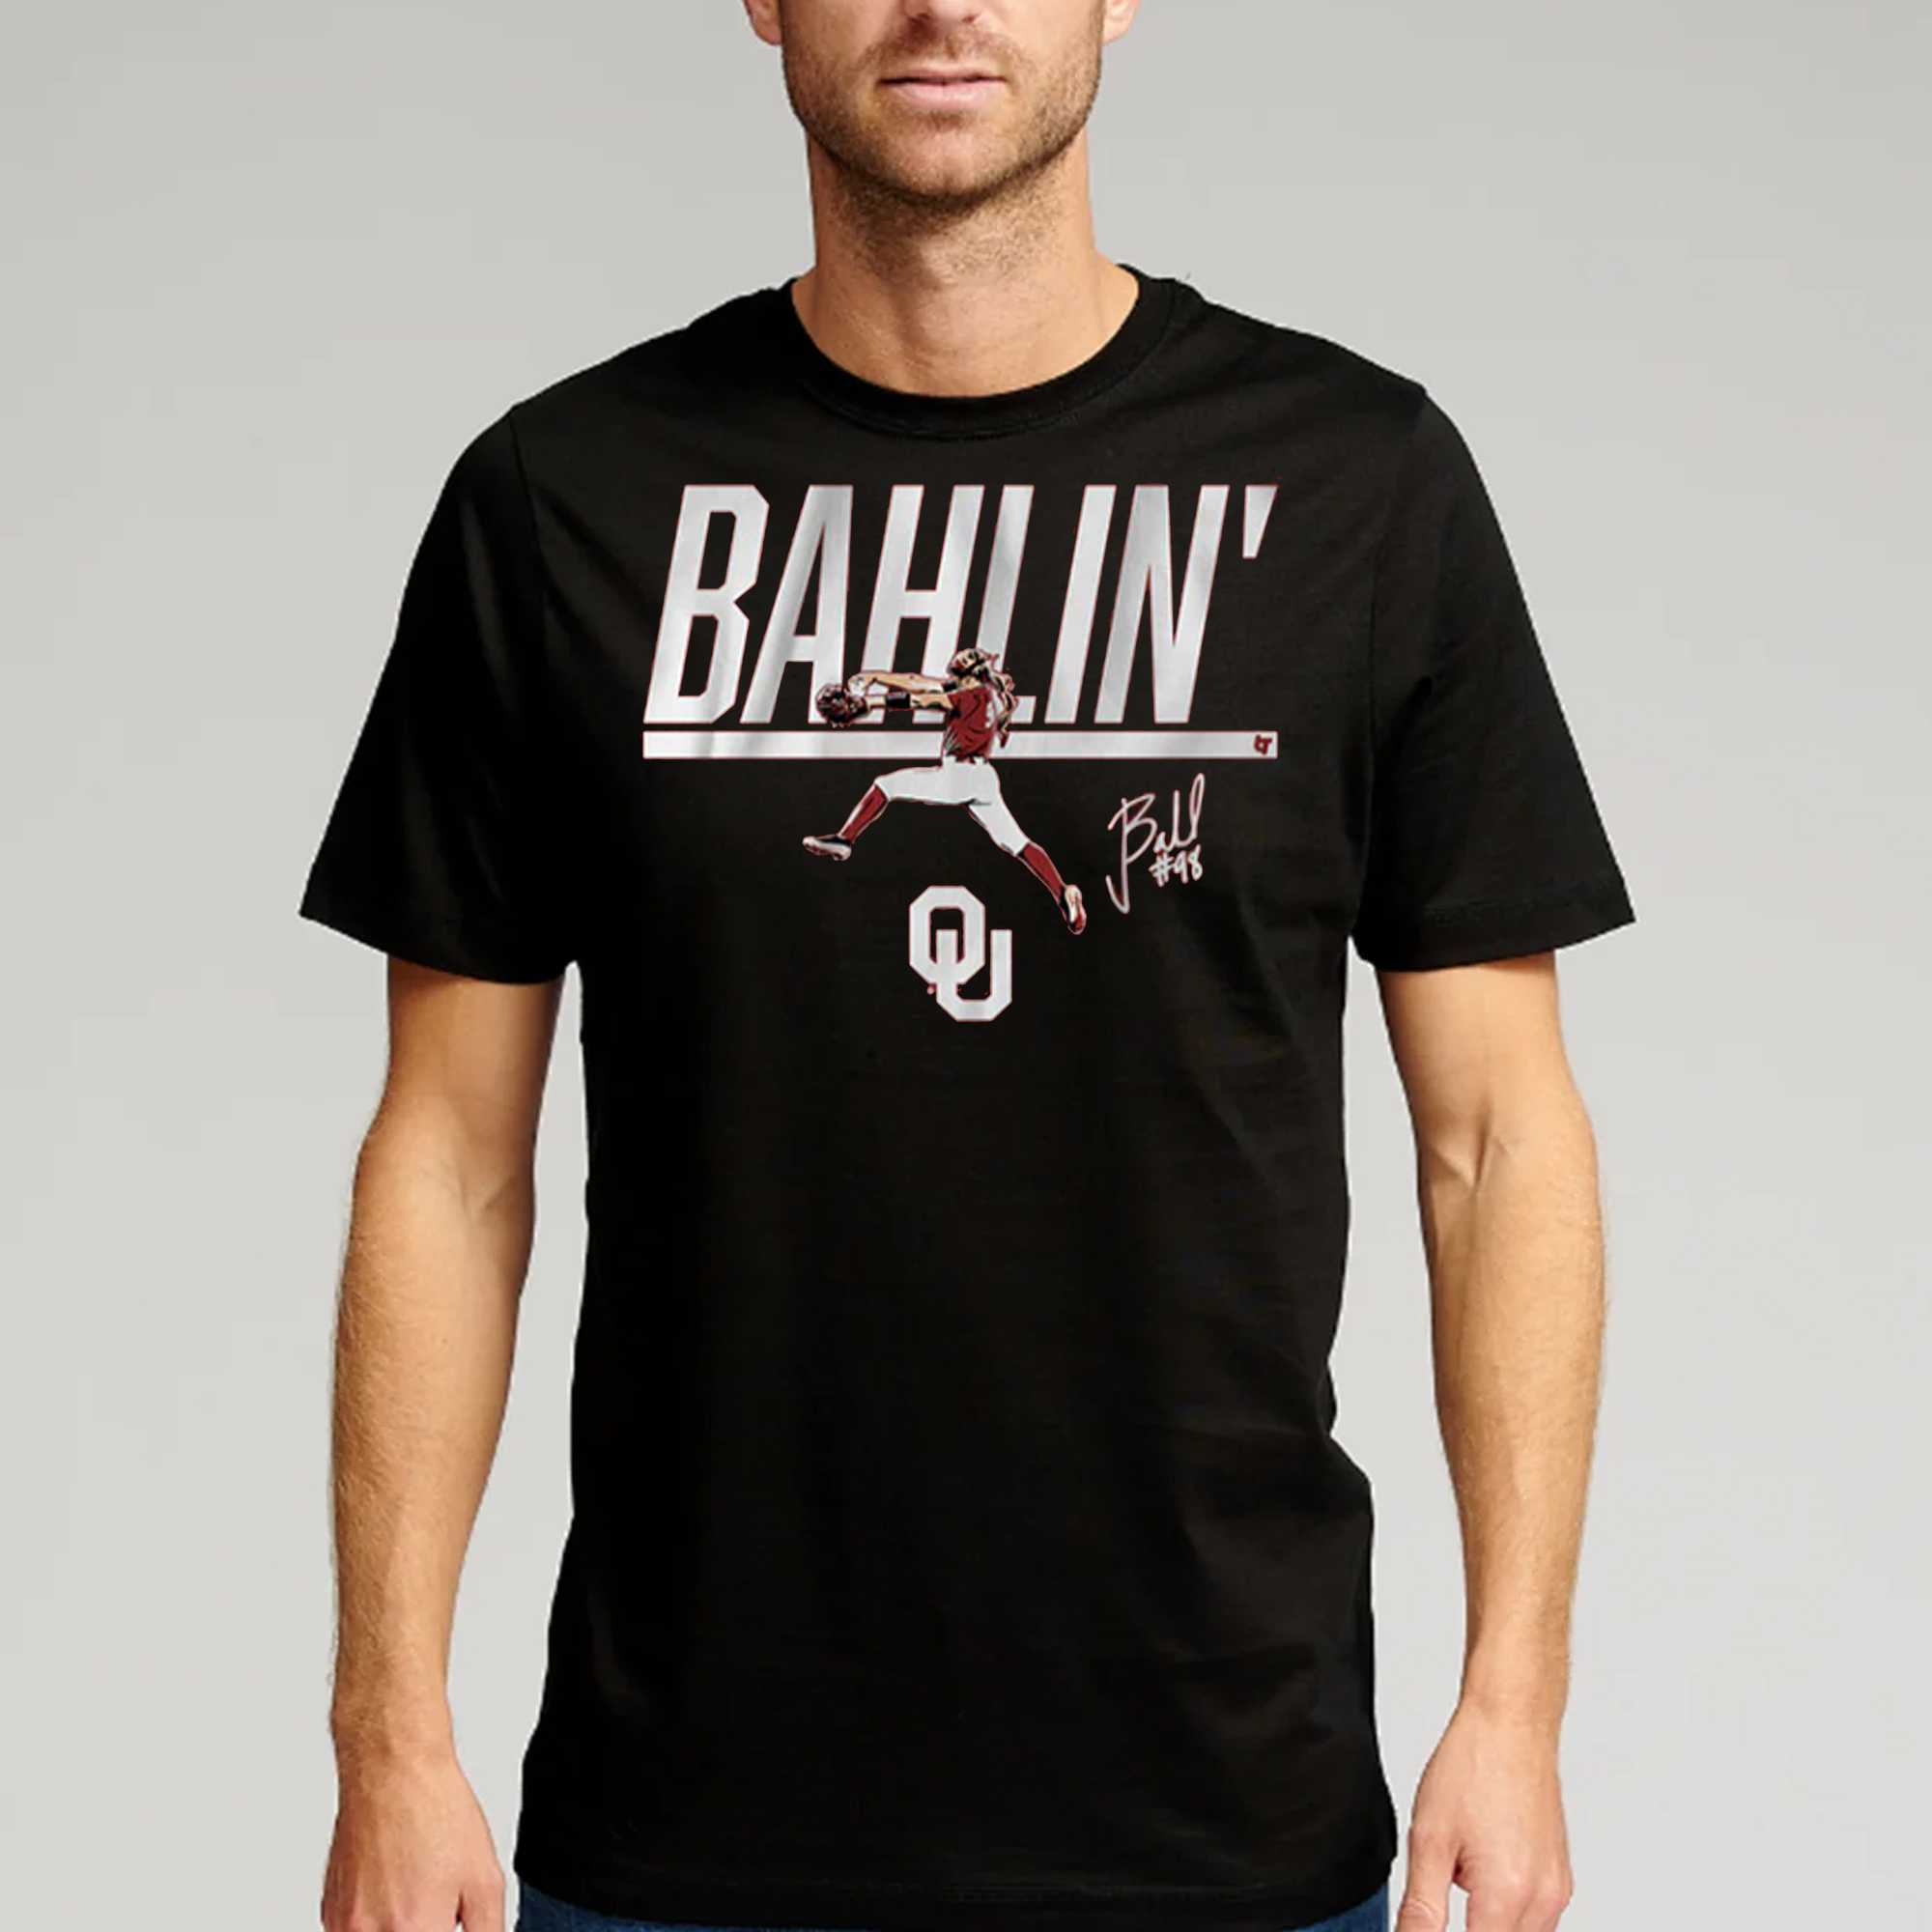 oklahoma softball jordy bahl bahllin shirt 1